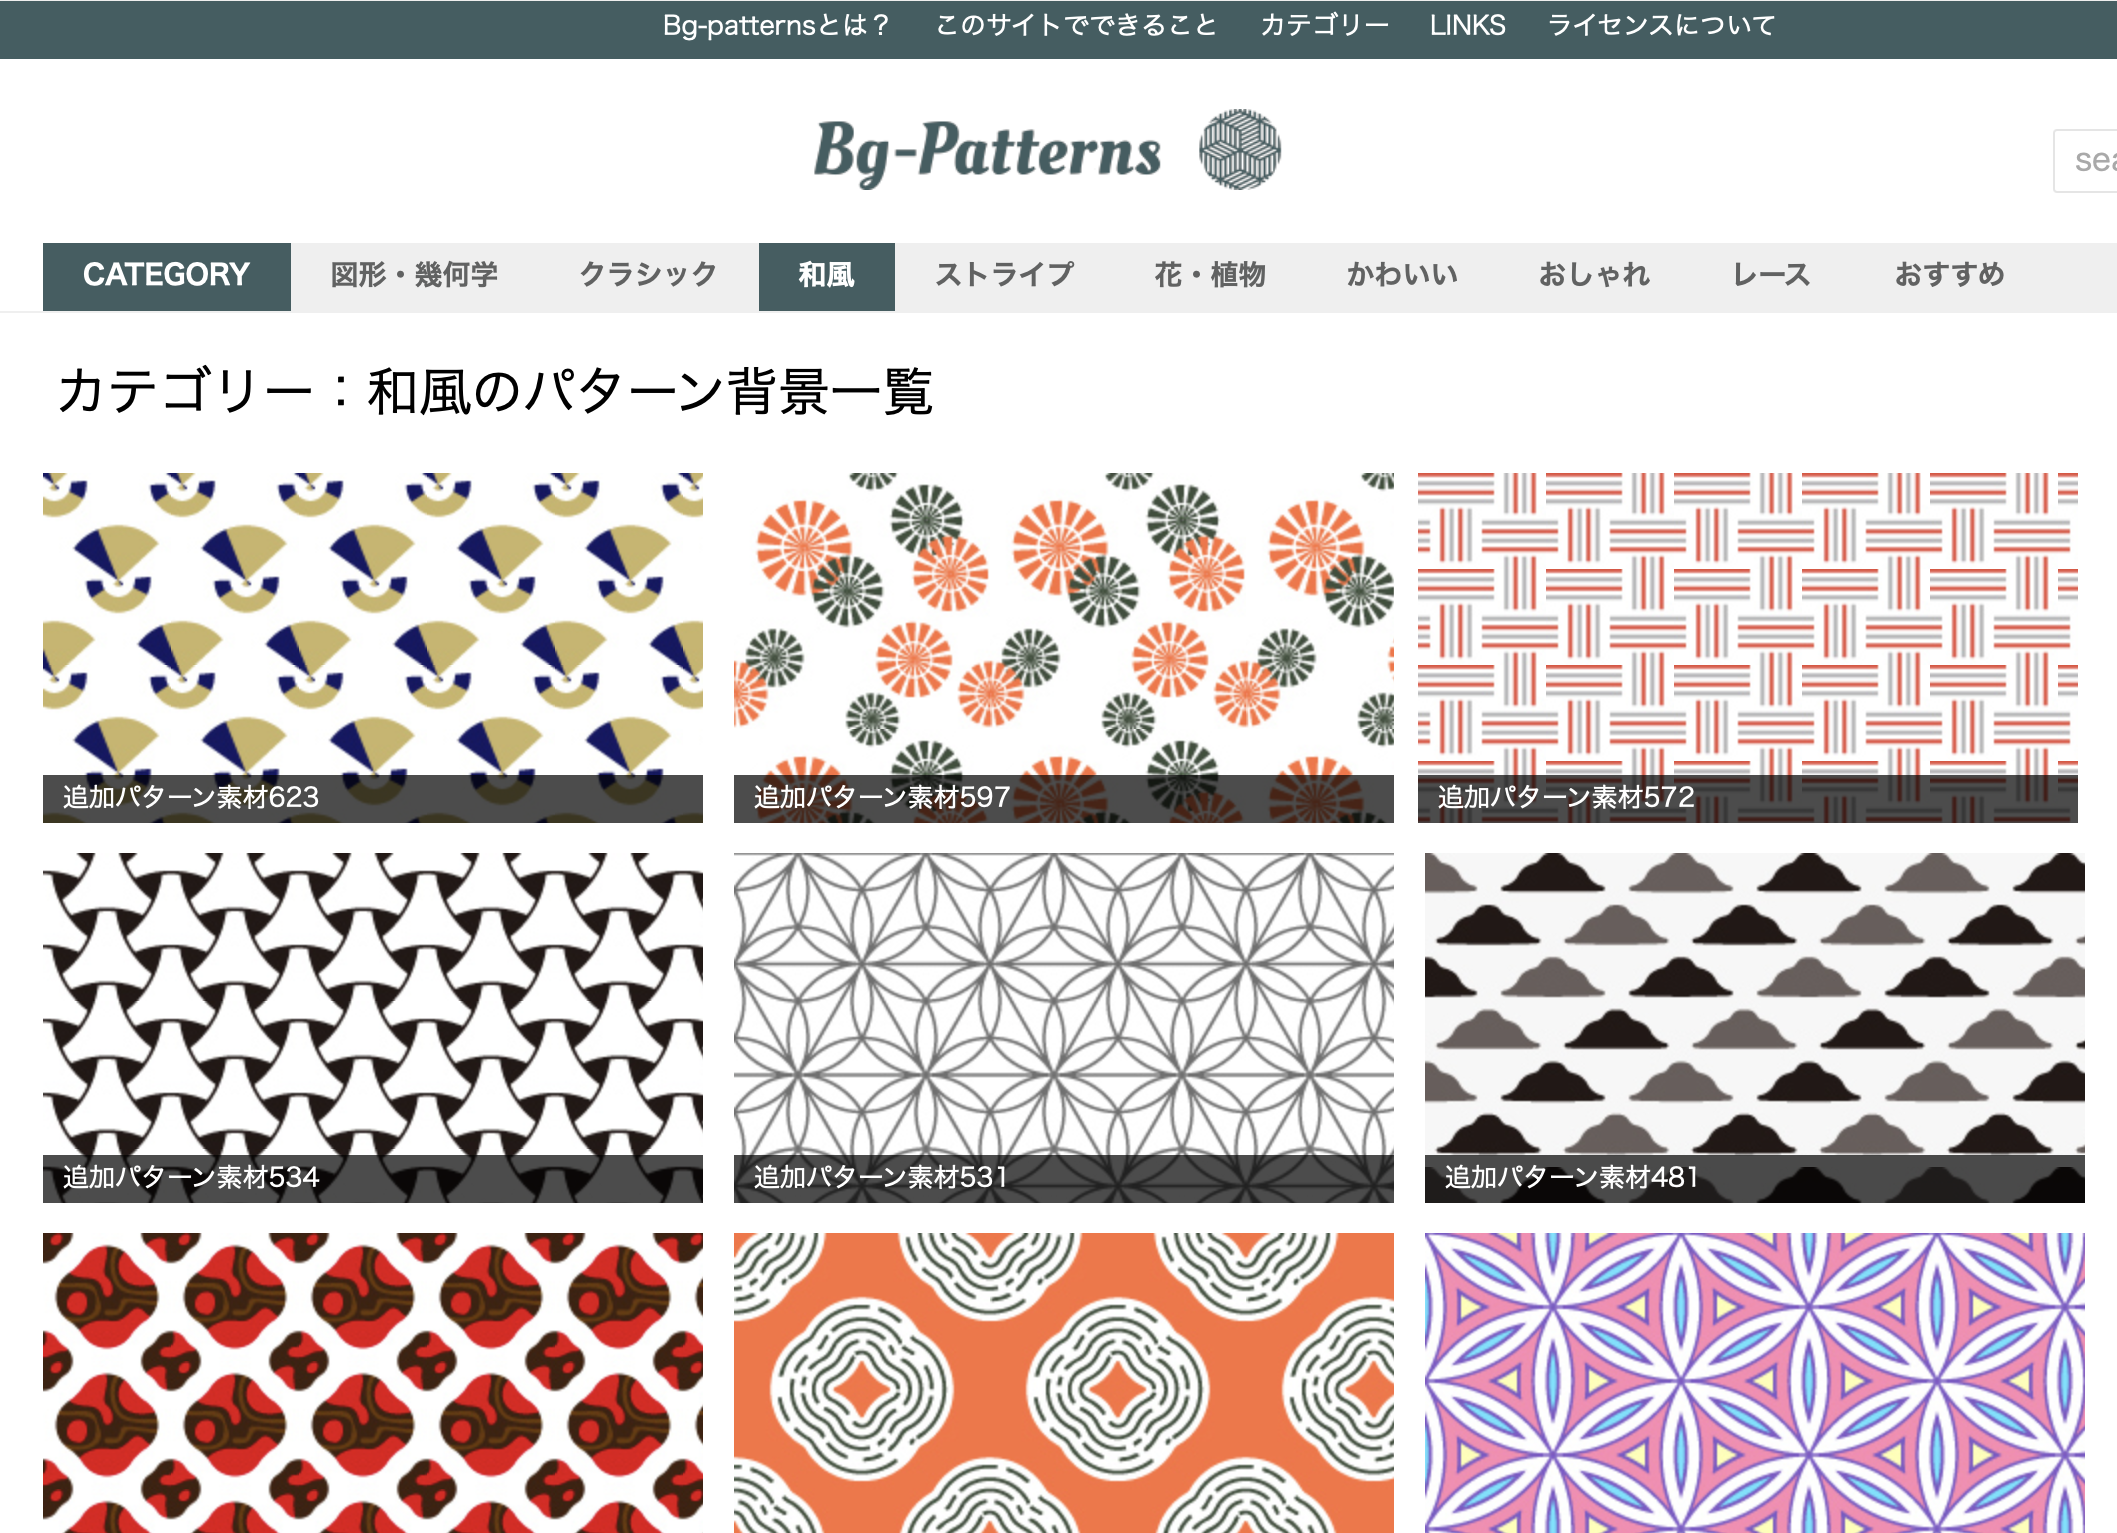 Site Image: Bg-Patterns